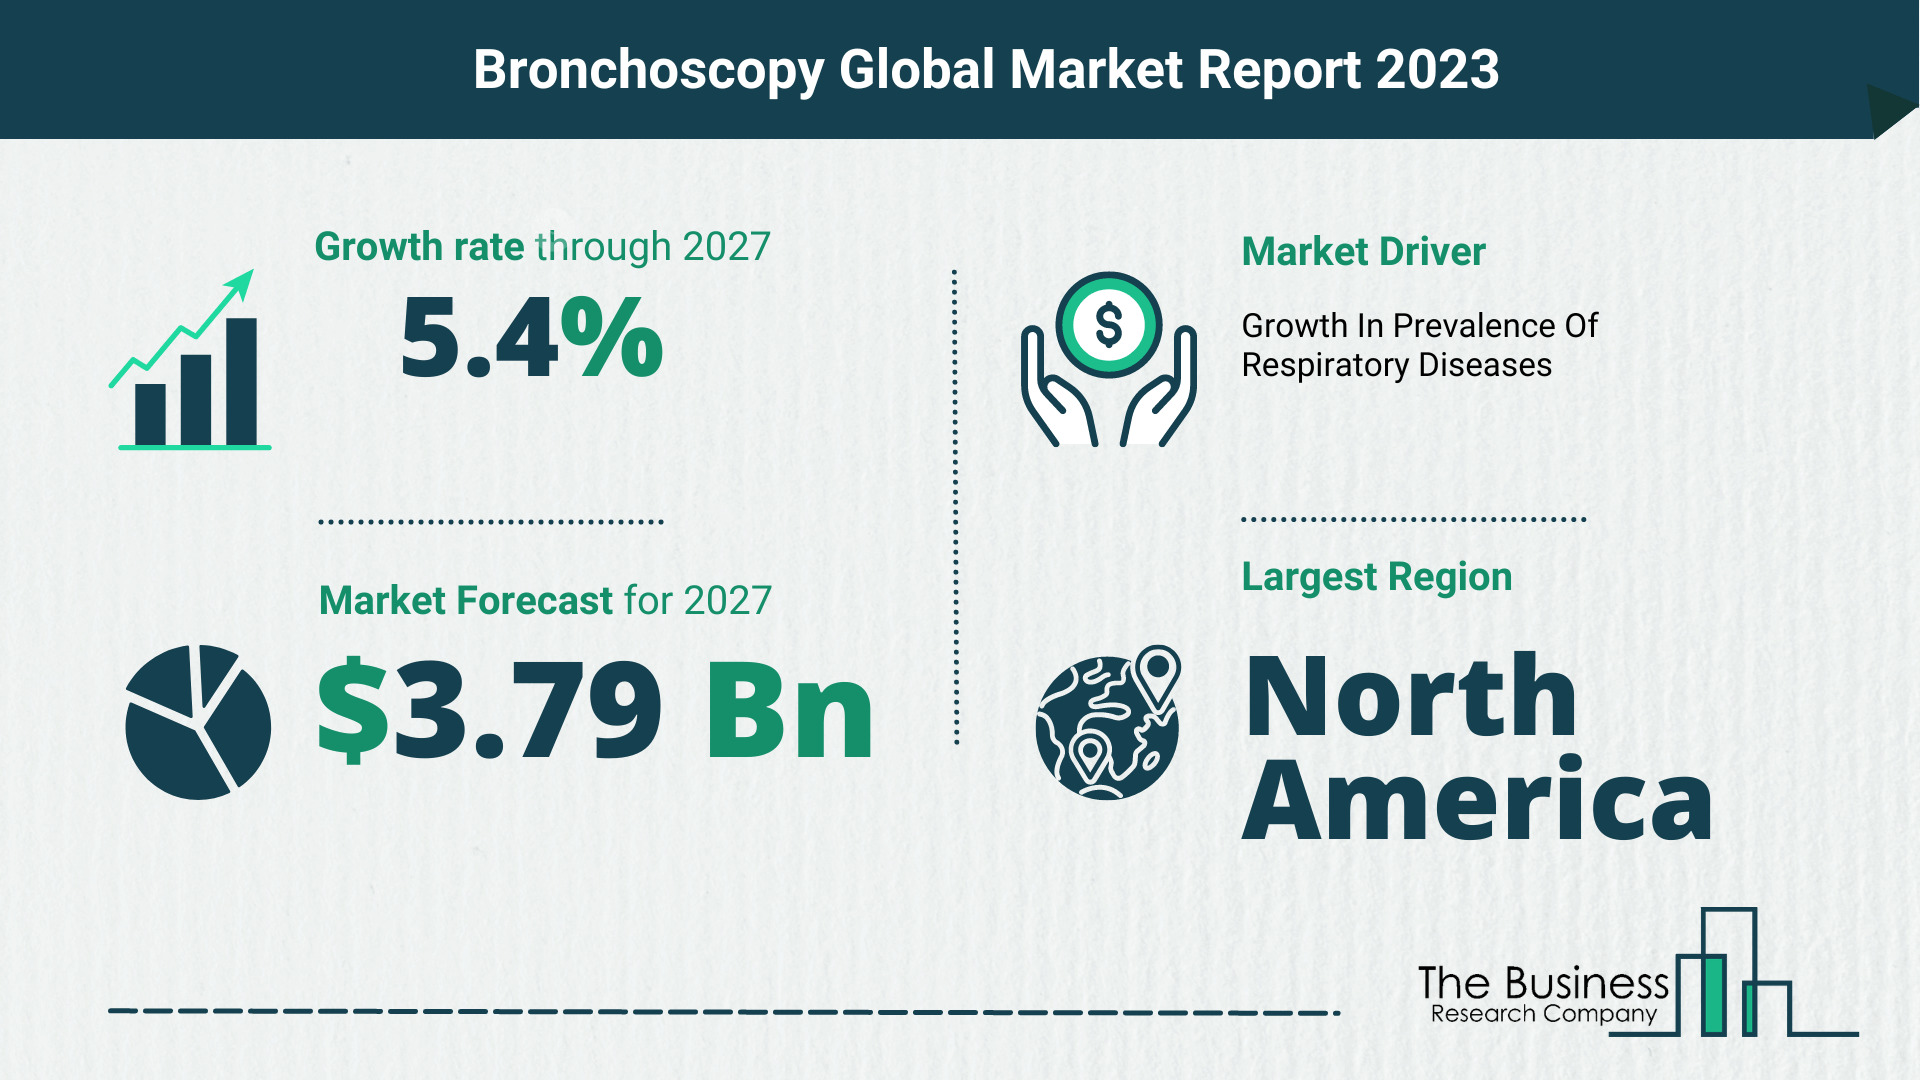 Global Bronchoscopy Market